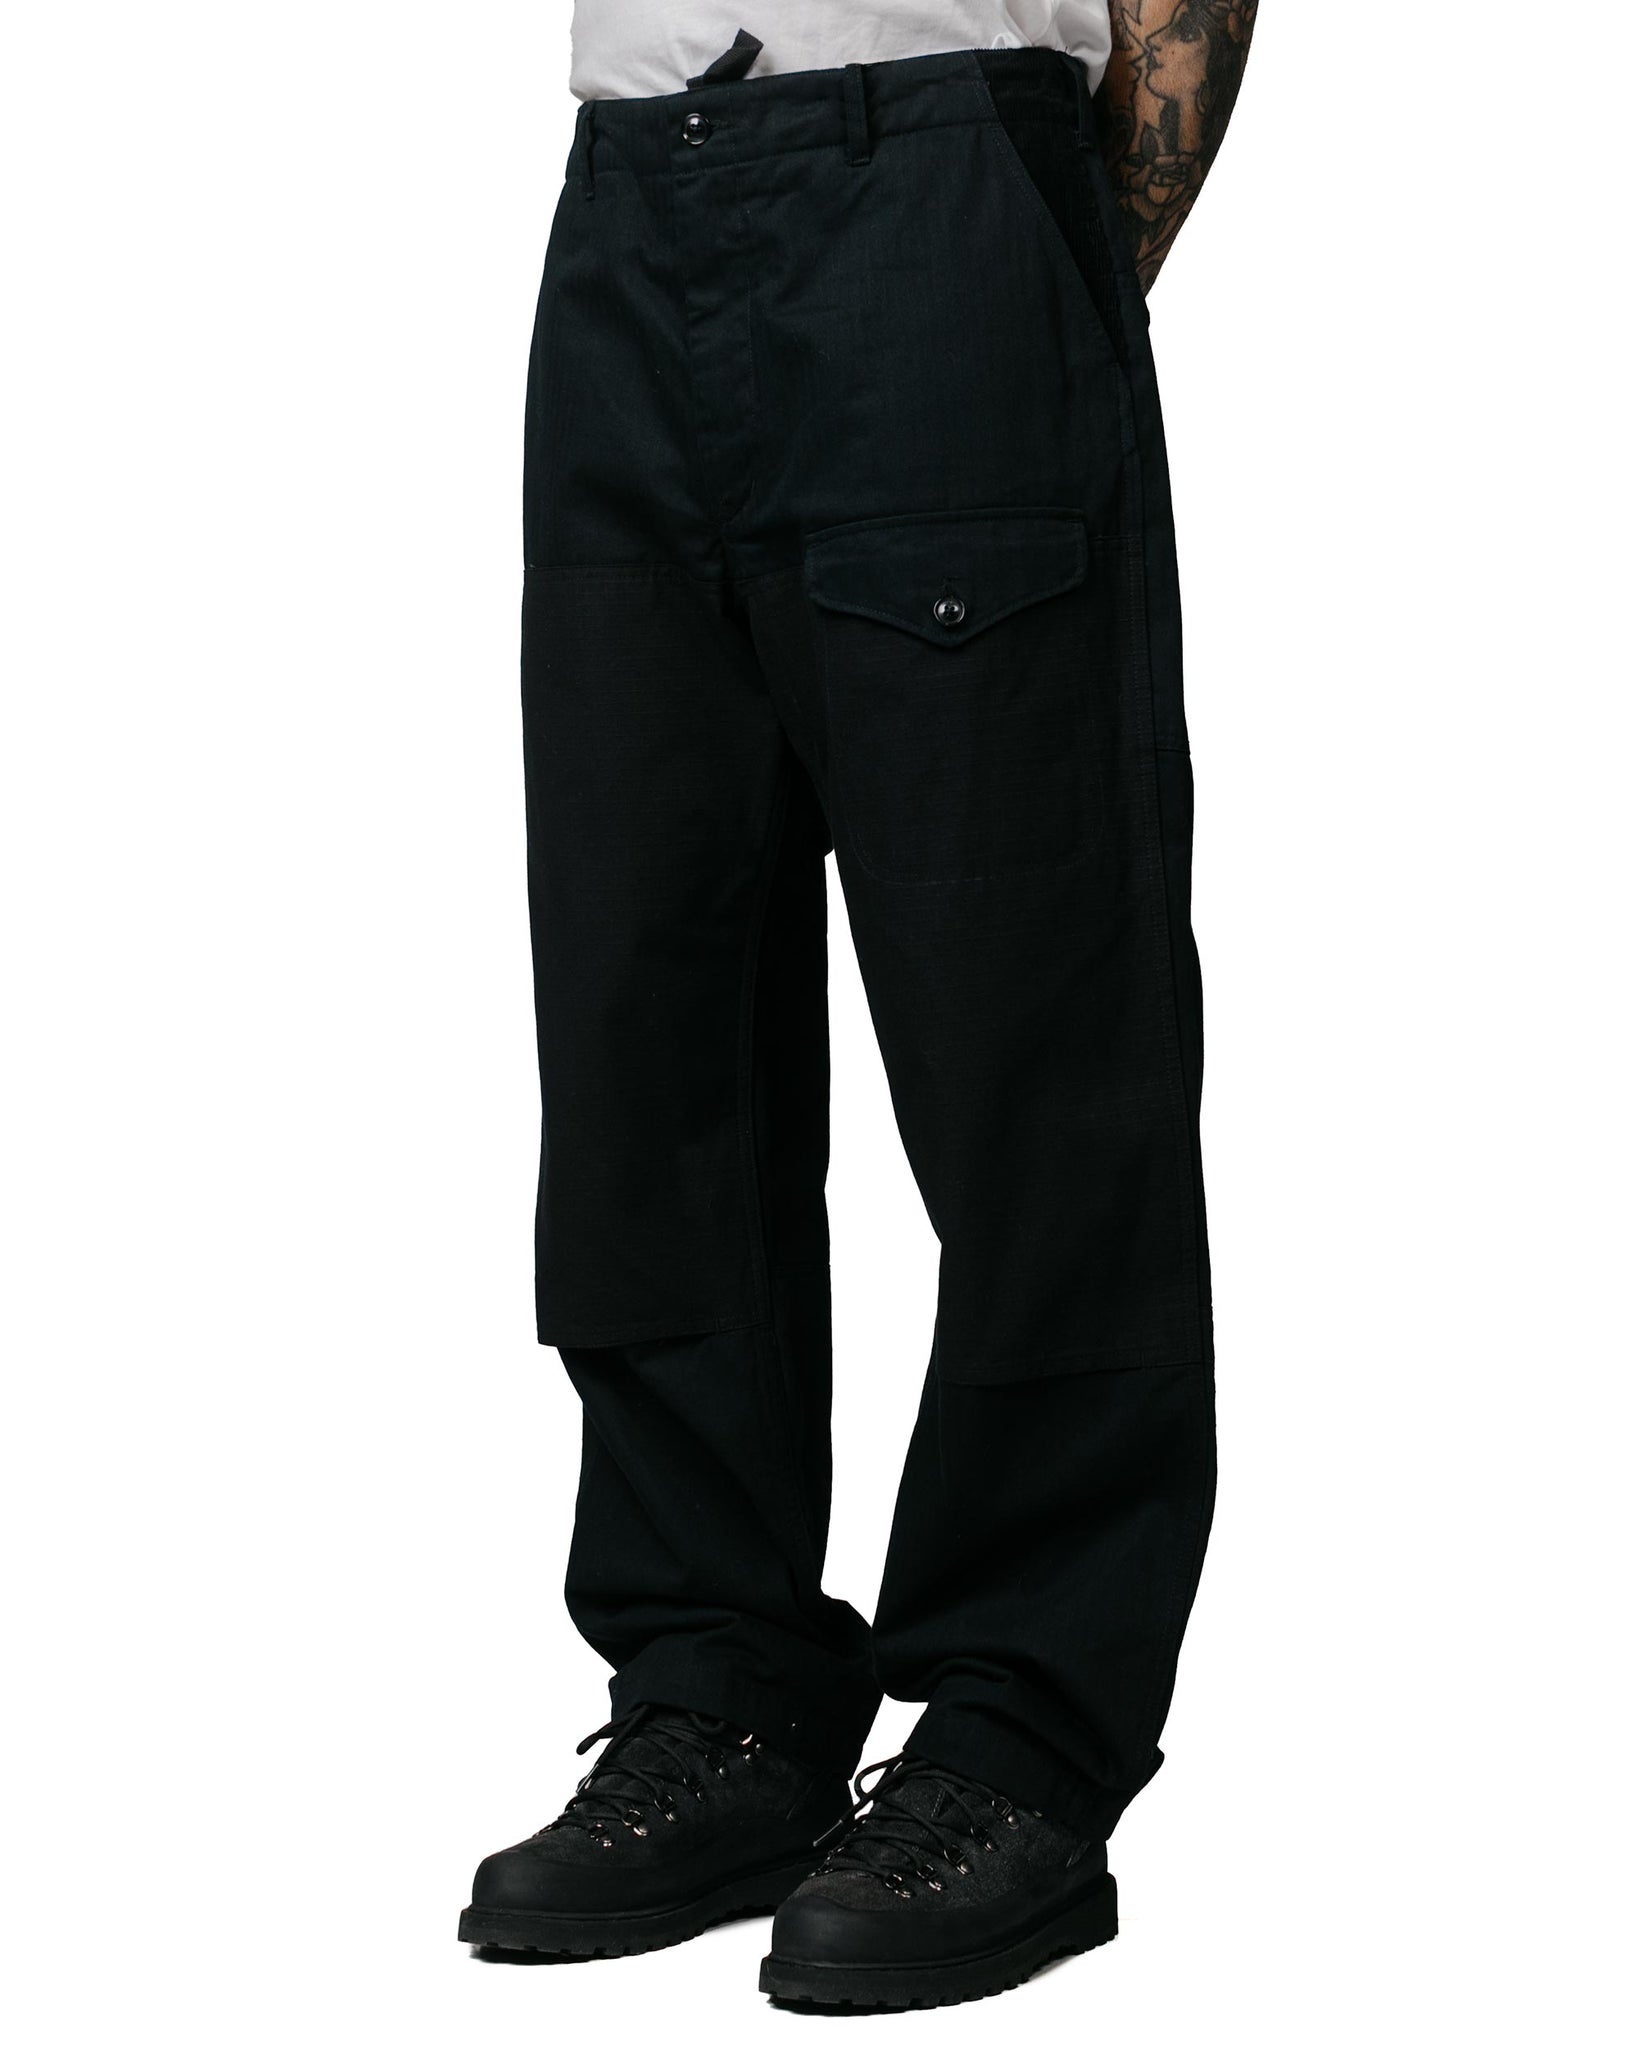 Engineered Garments Field Pant Black Cotton Herringbone Twill